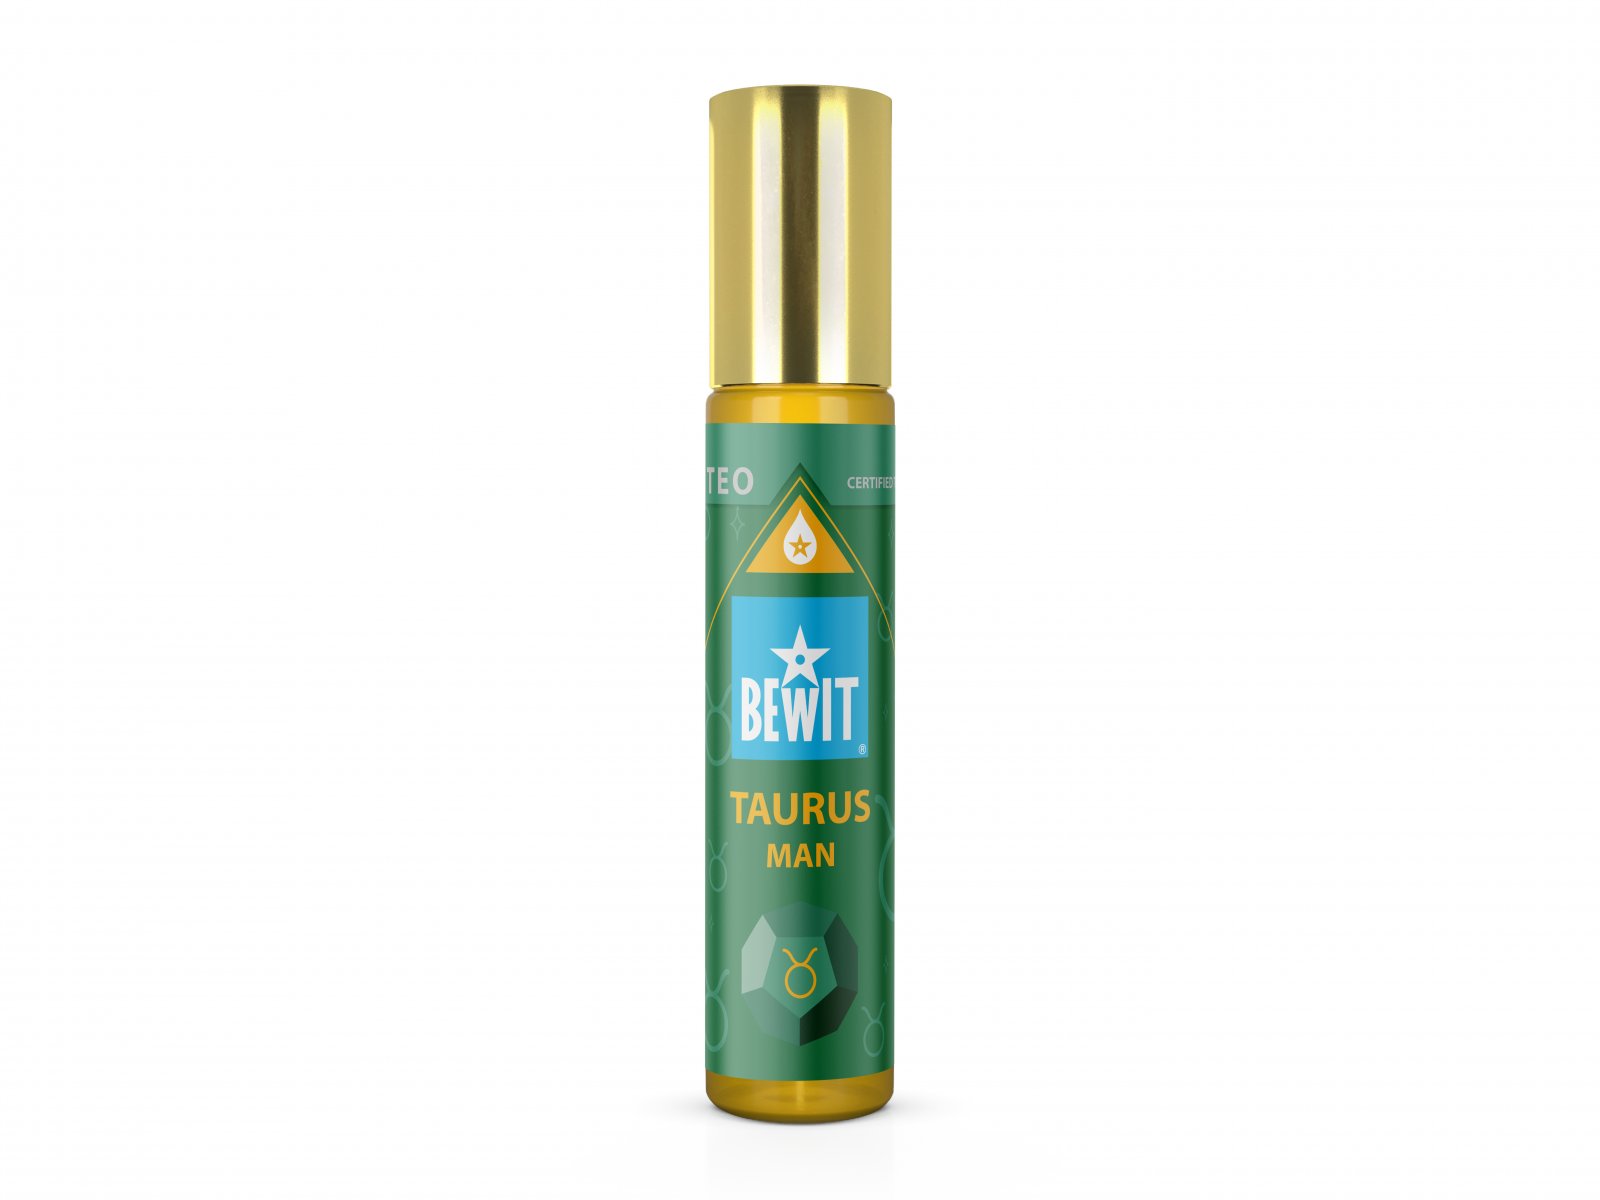 BEWIT MAN TAURUS (BULL) - Men's roll-on oil perfume